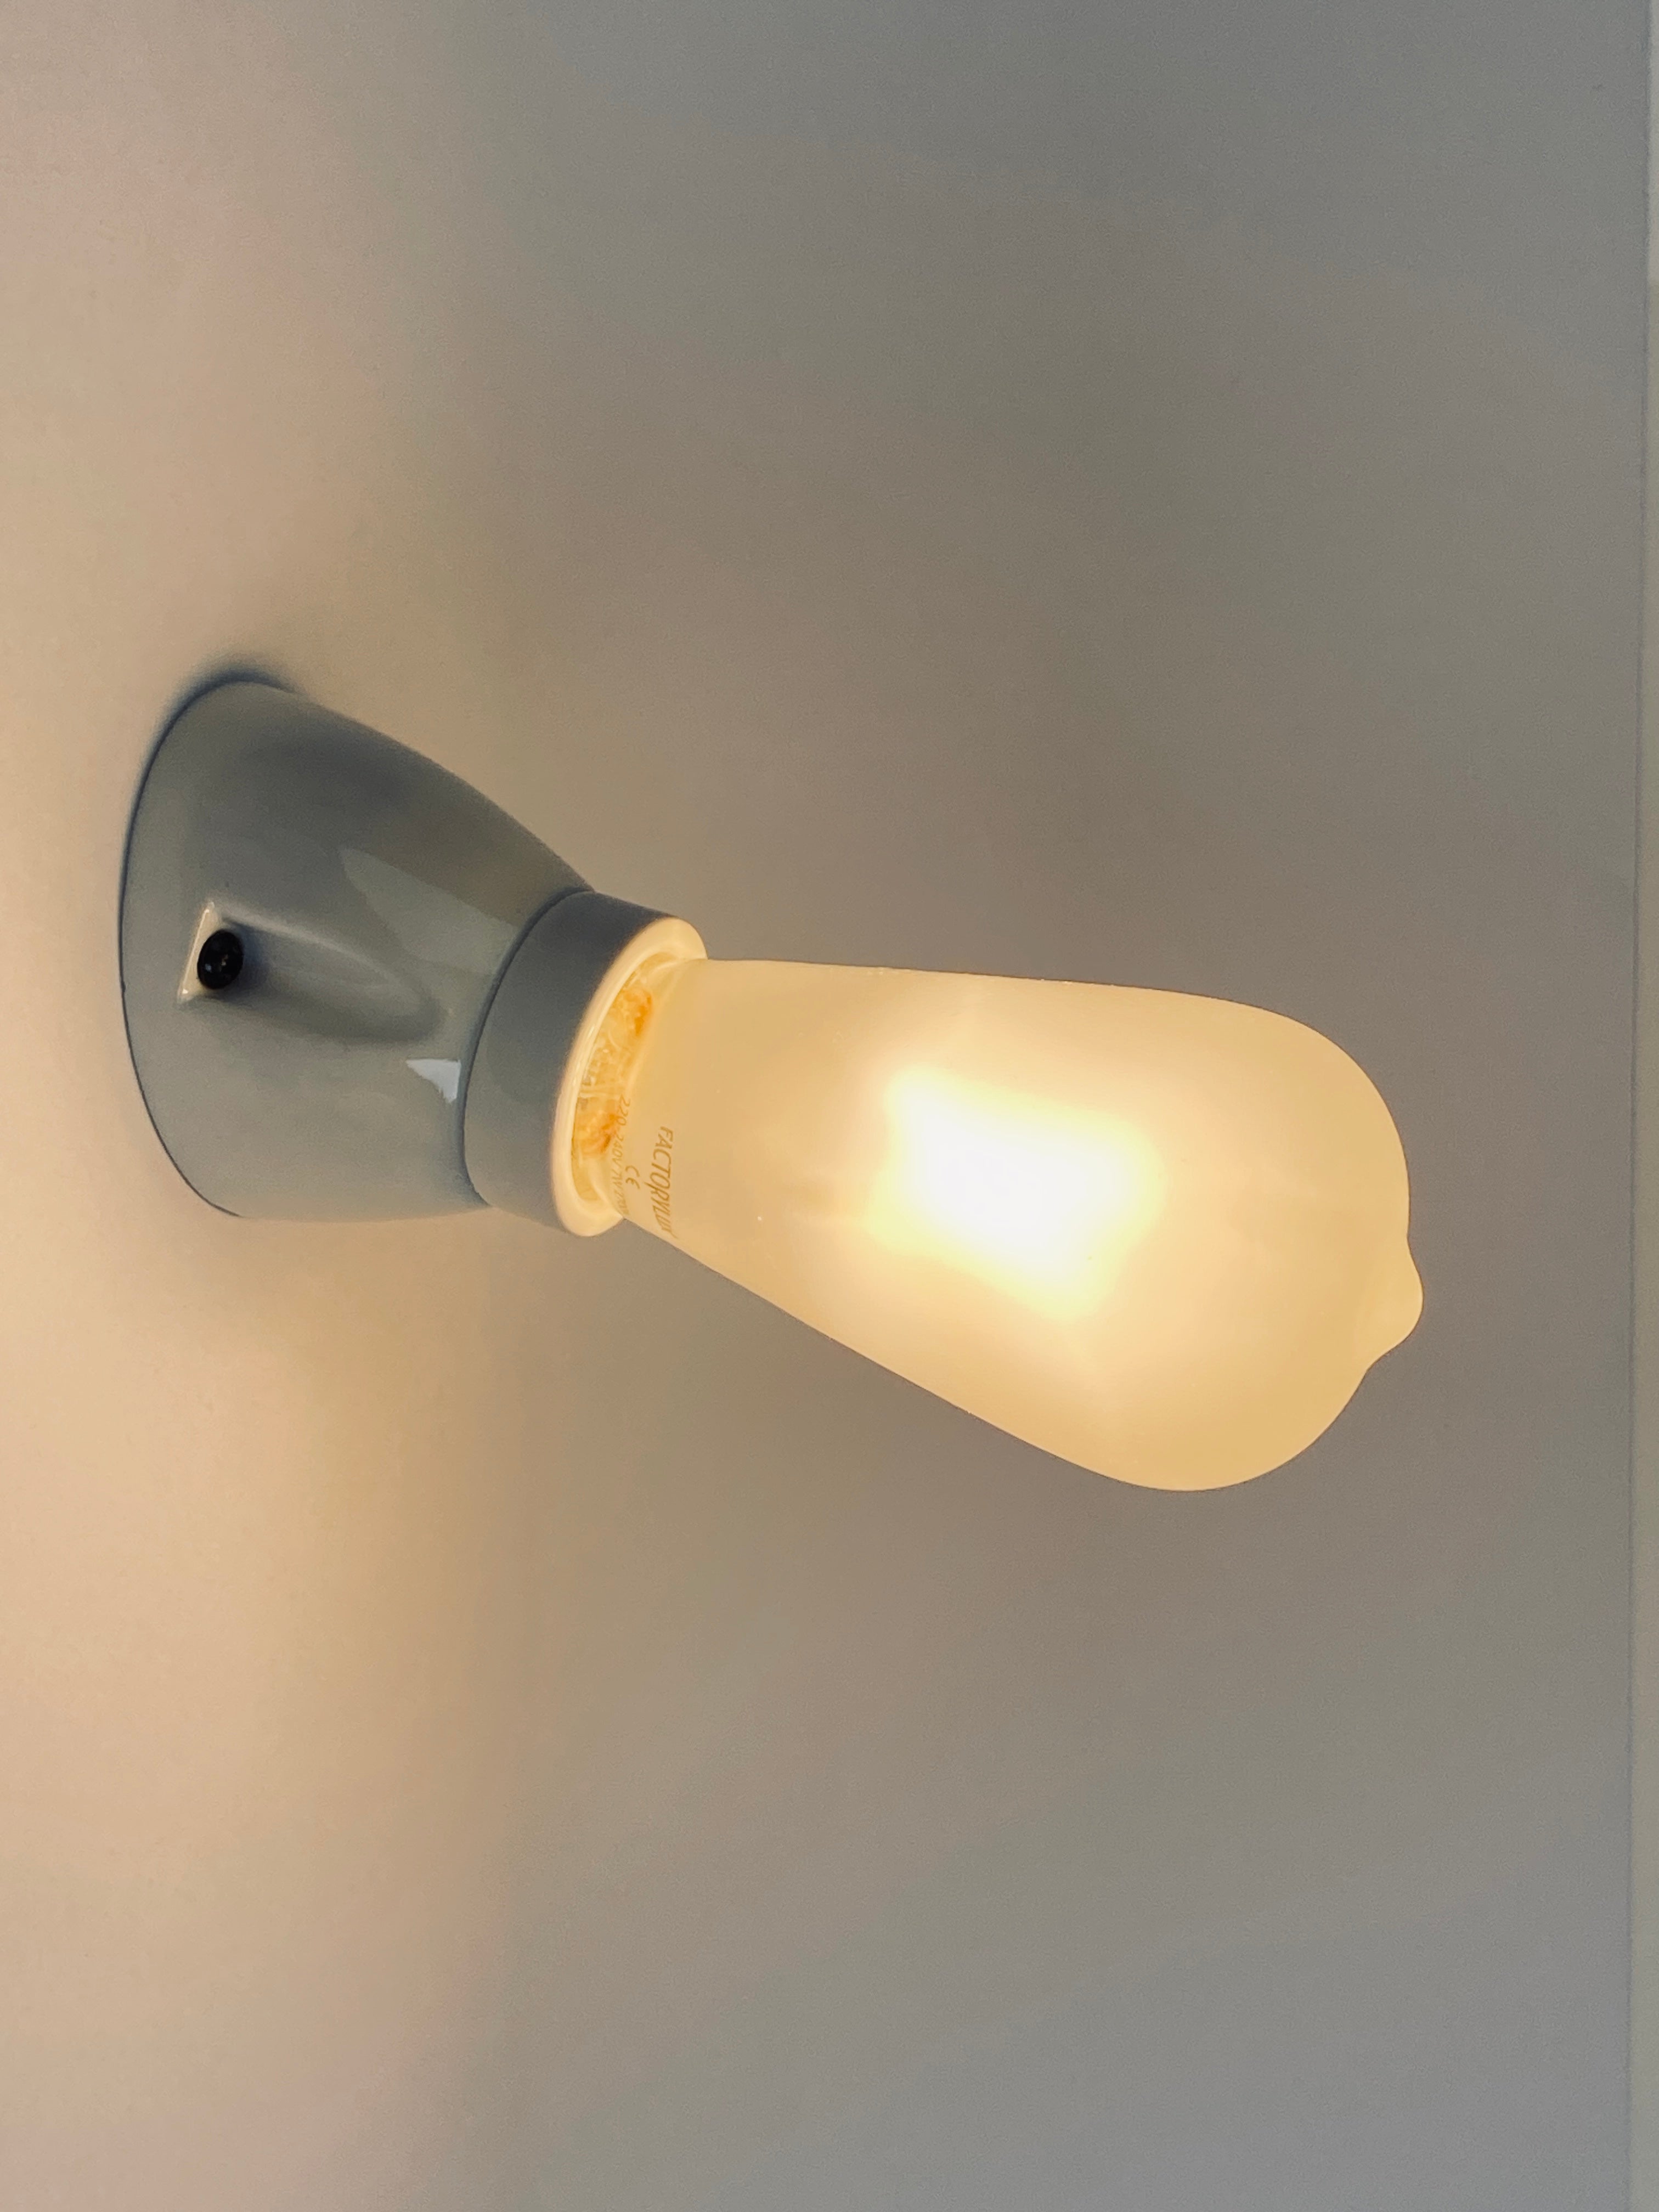 Gift Box: 2 x Ceramic Wall Light INC. 2 x Light Bulb | Choose your own style